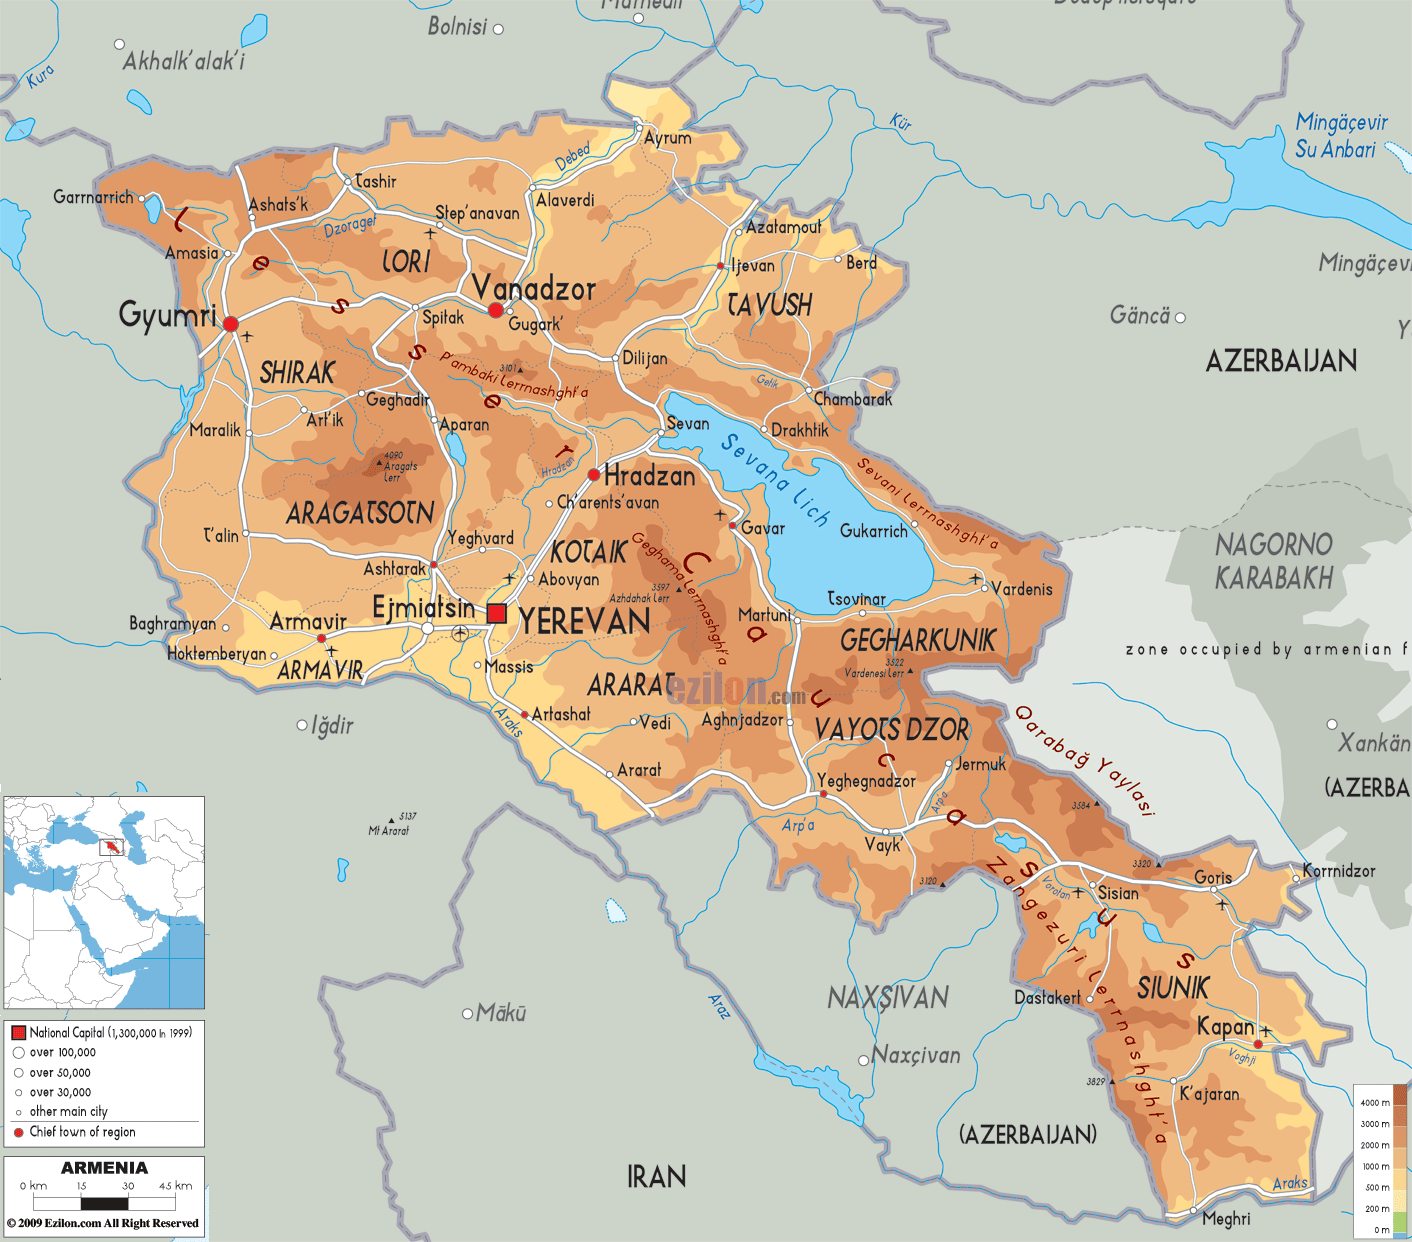 armenia-country-profile-republic-of-armenia-hayastan